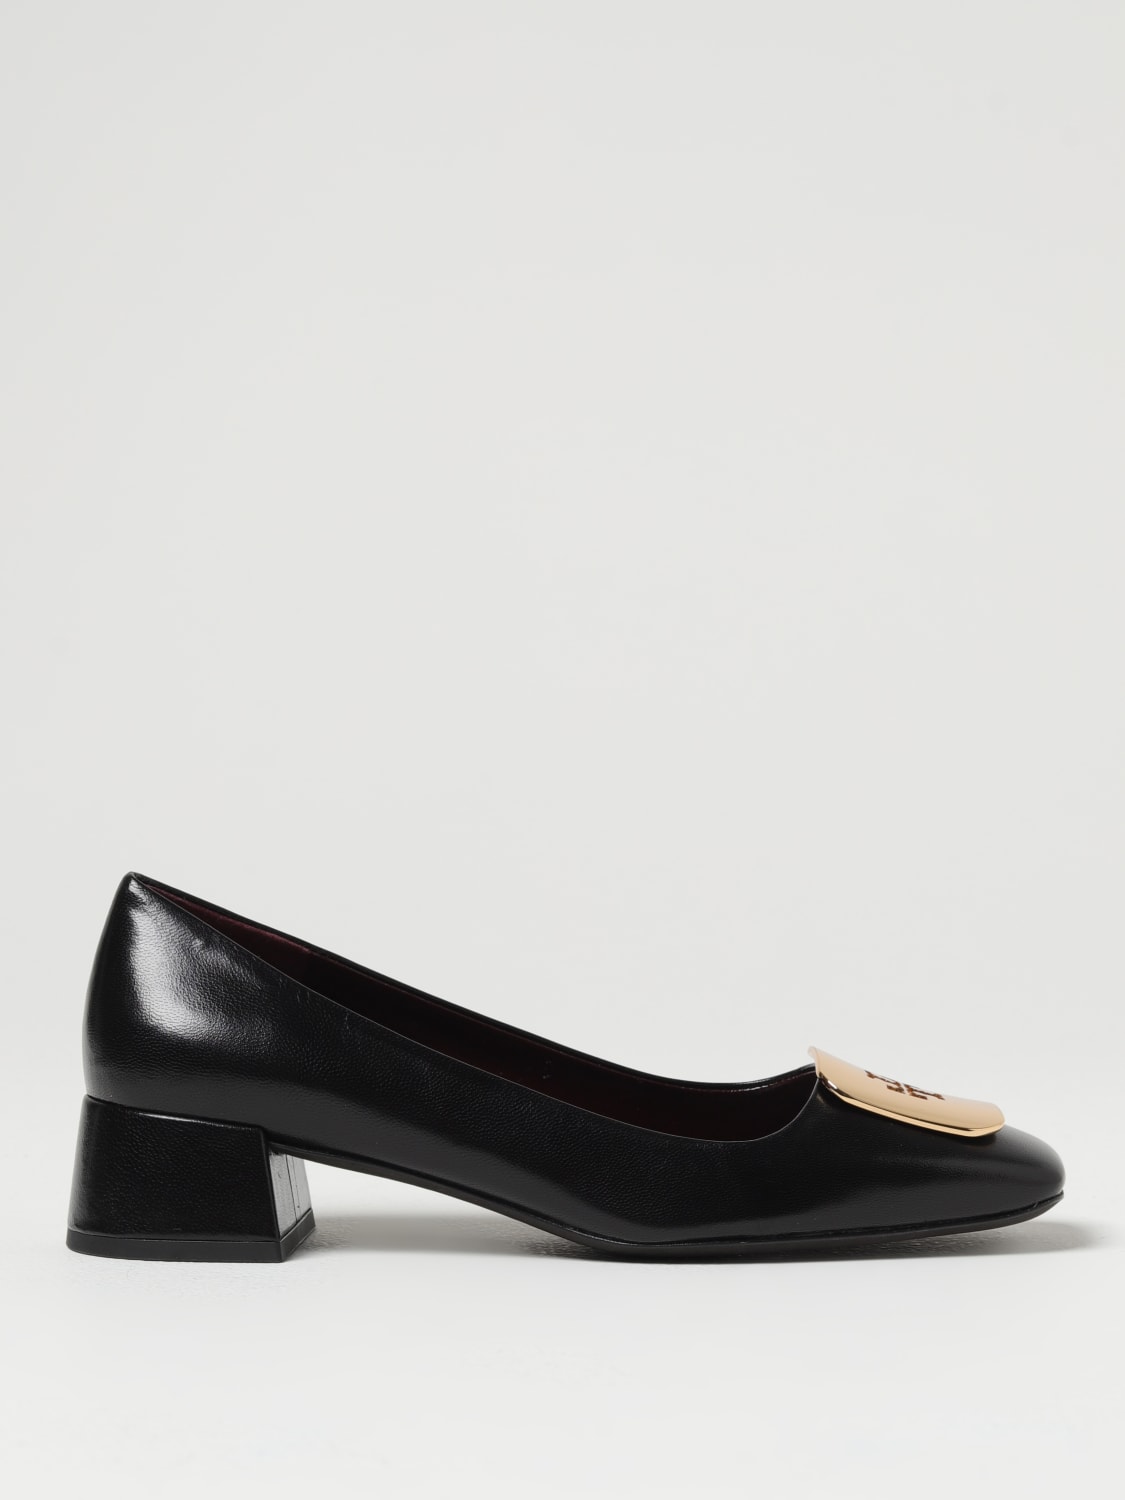 TORY BURCH: Flat shoes woman - Black | Tory Burch high heel shoes 